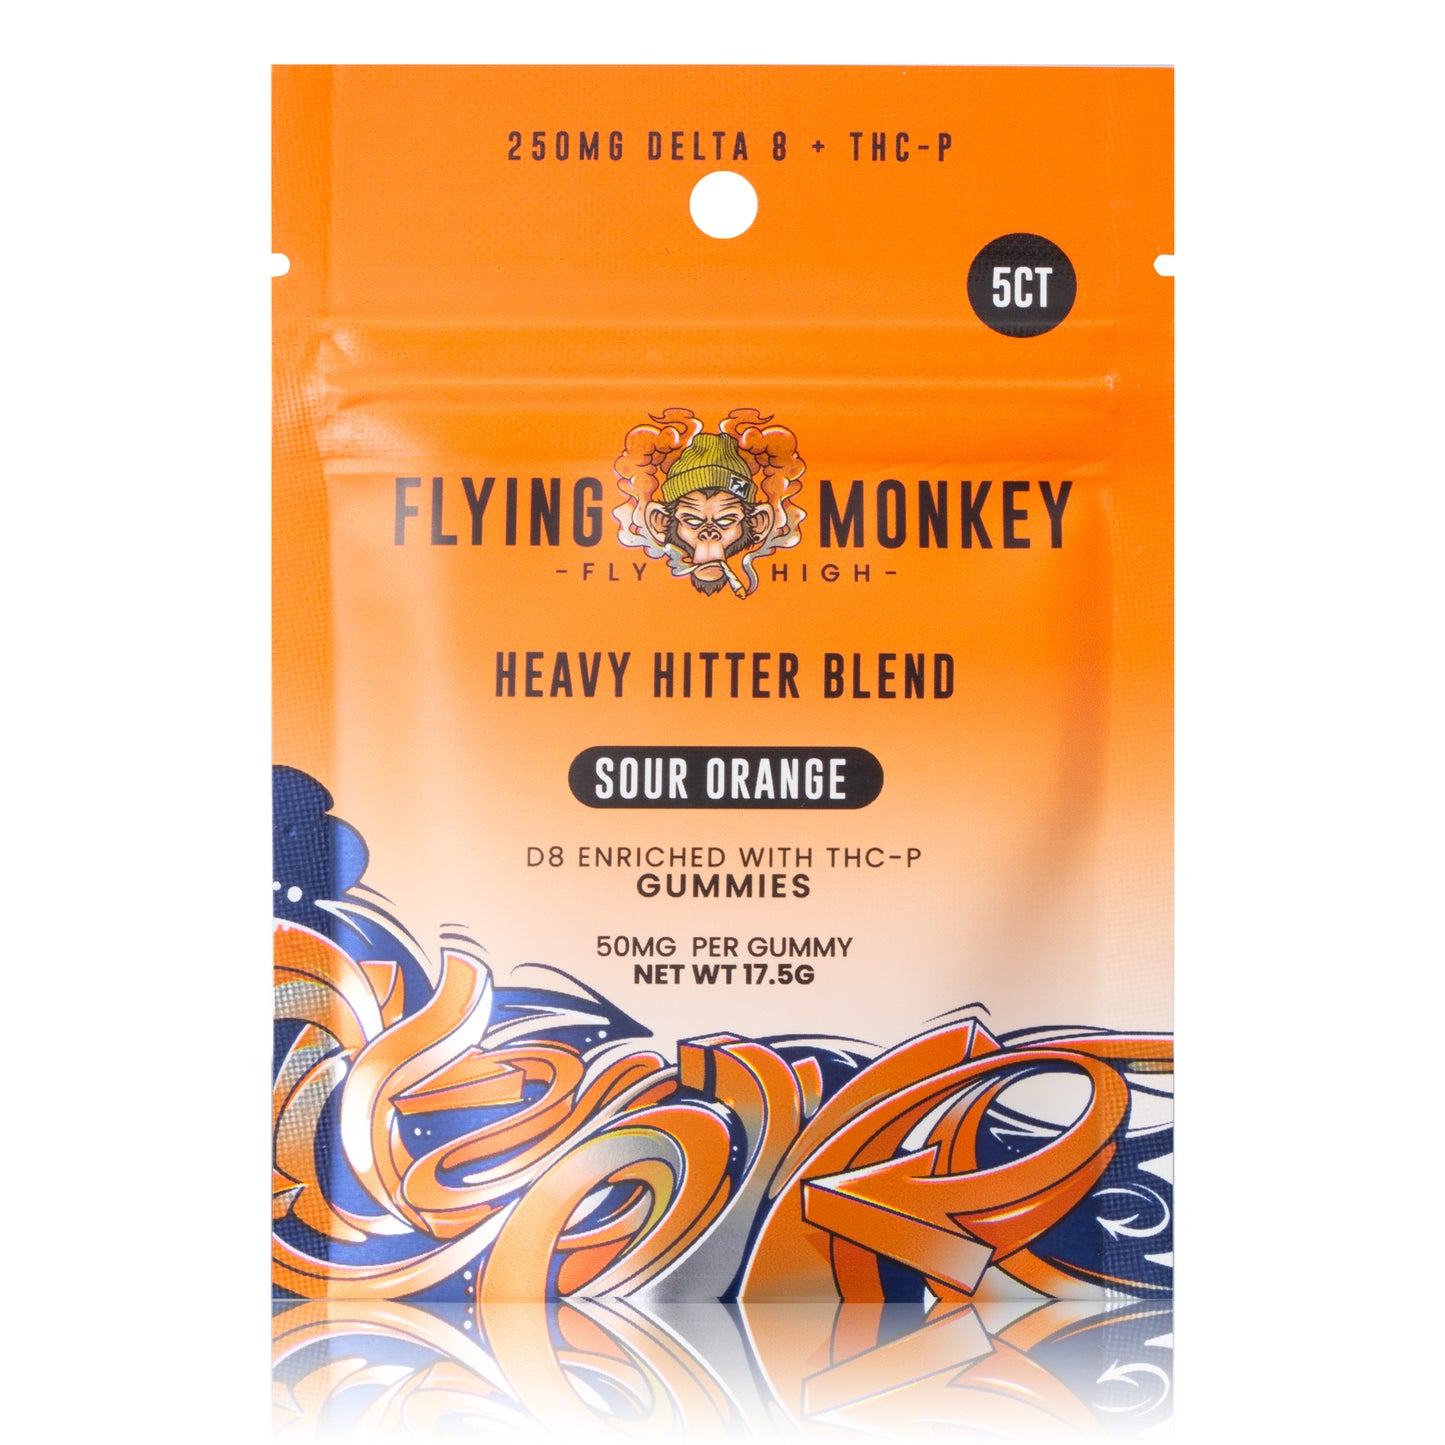 Flying Monkey Heavy Hitter 50mg gummy bag in Sour Orange flavor